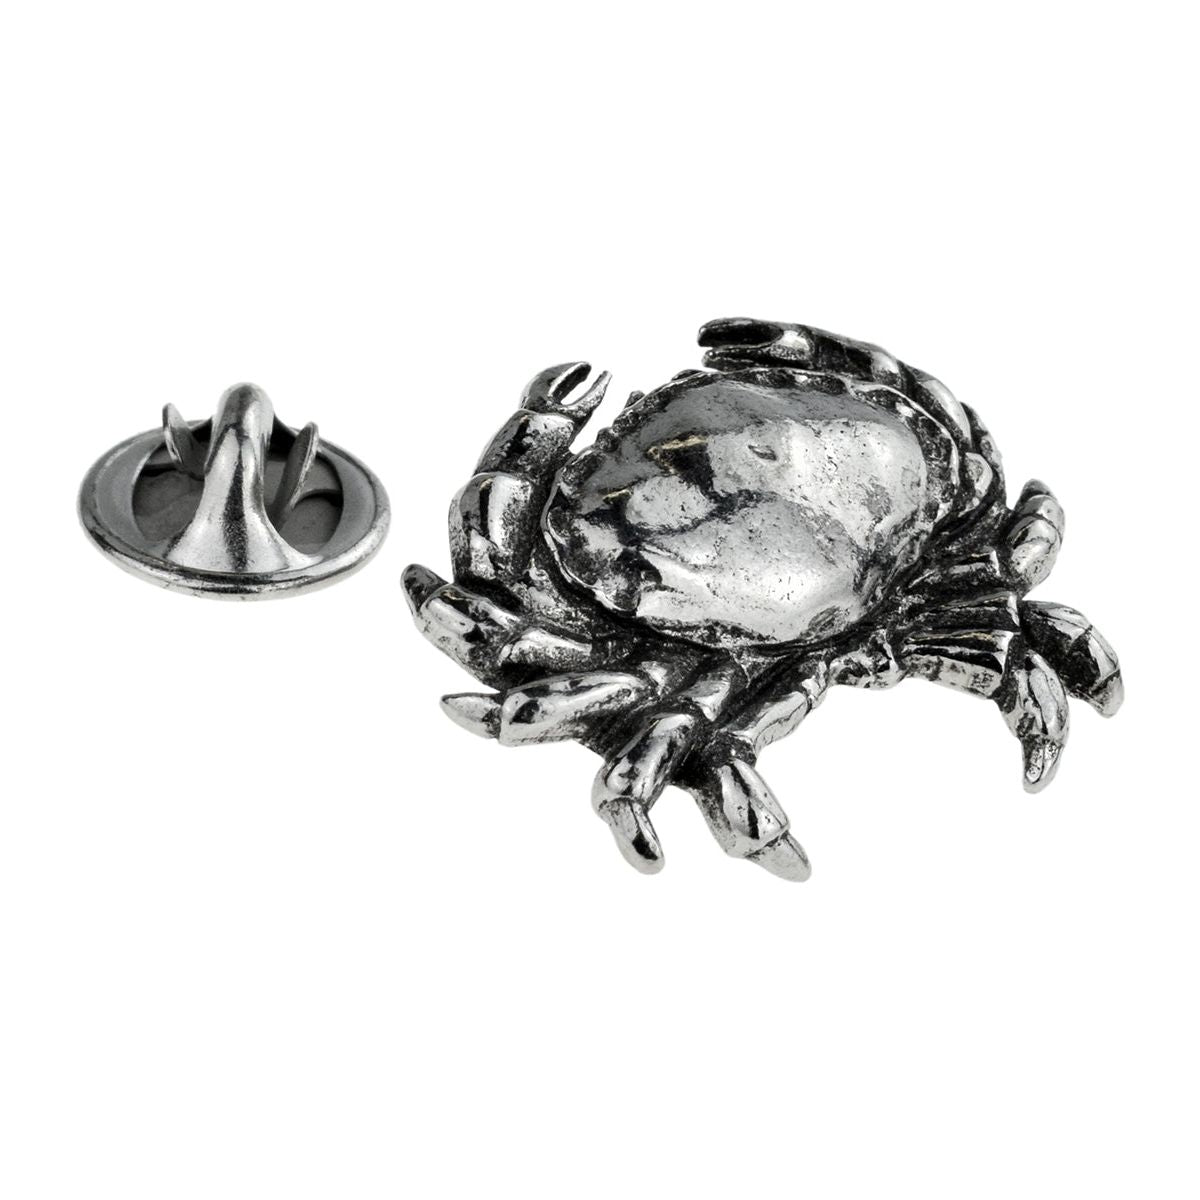 Crab Design Pewter Lapel Pin Badge - Ashton and Finch